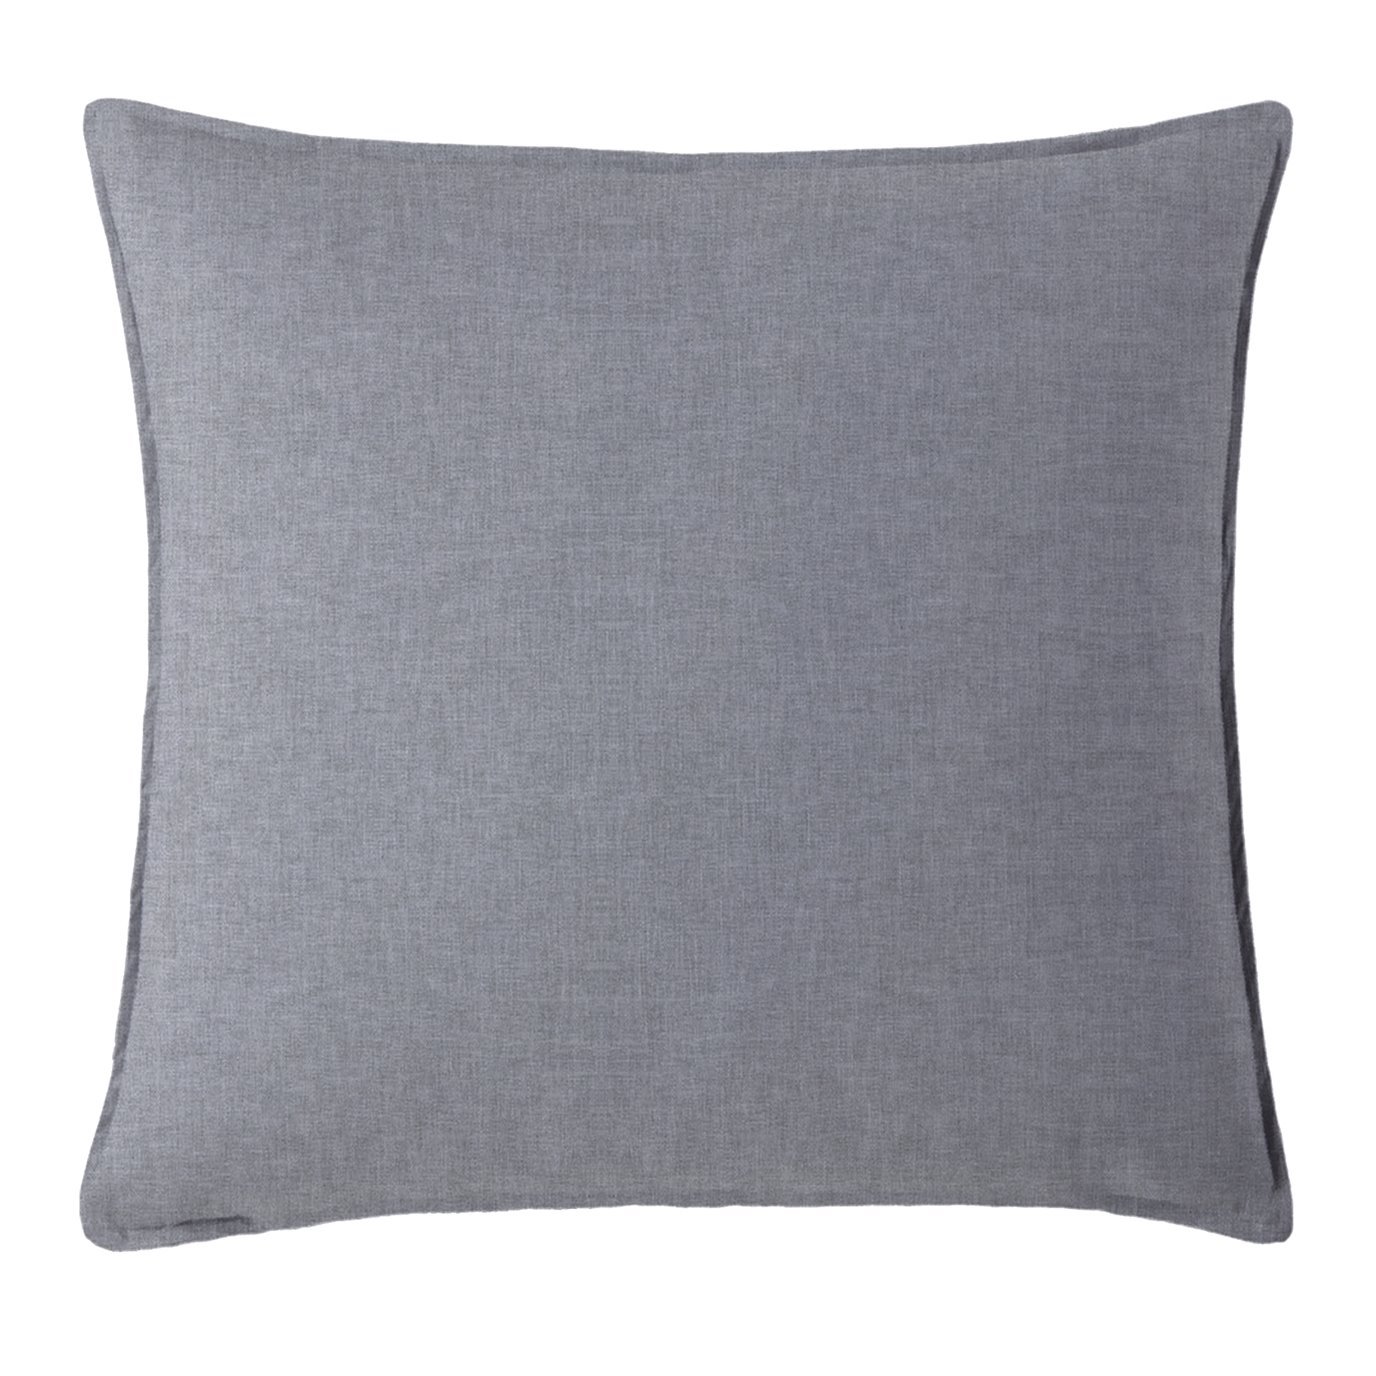 Rodney Square Pillow 24"x24"